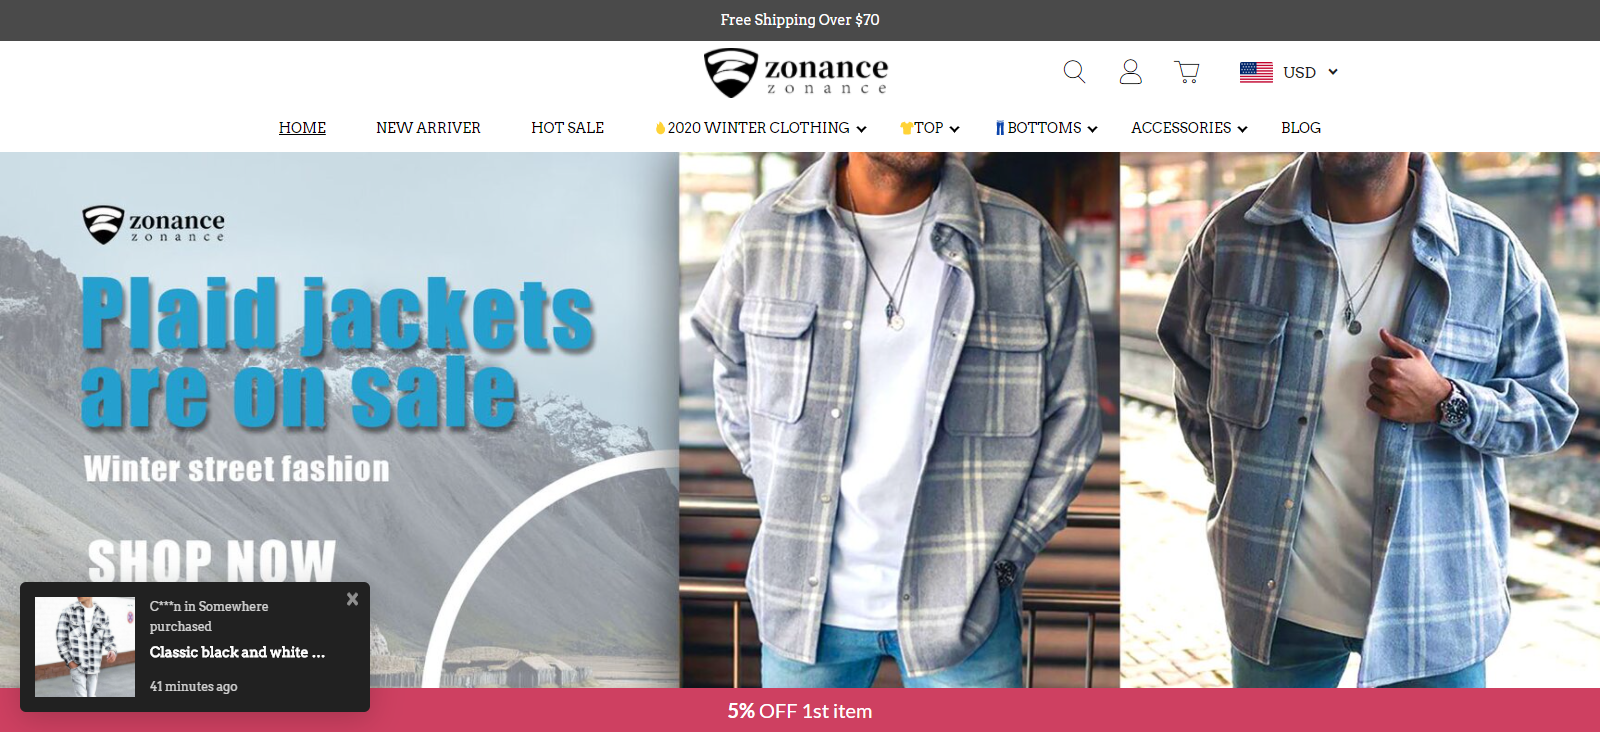 Zonance.com Homepage Image